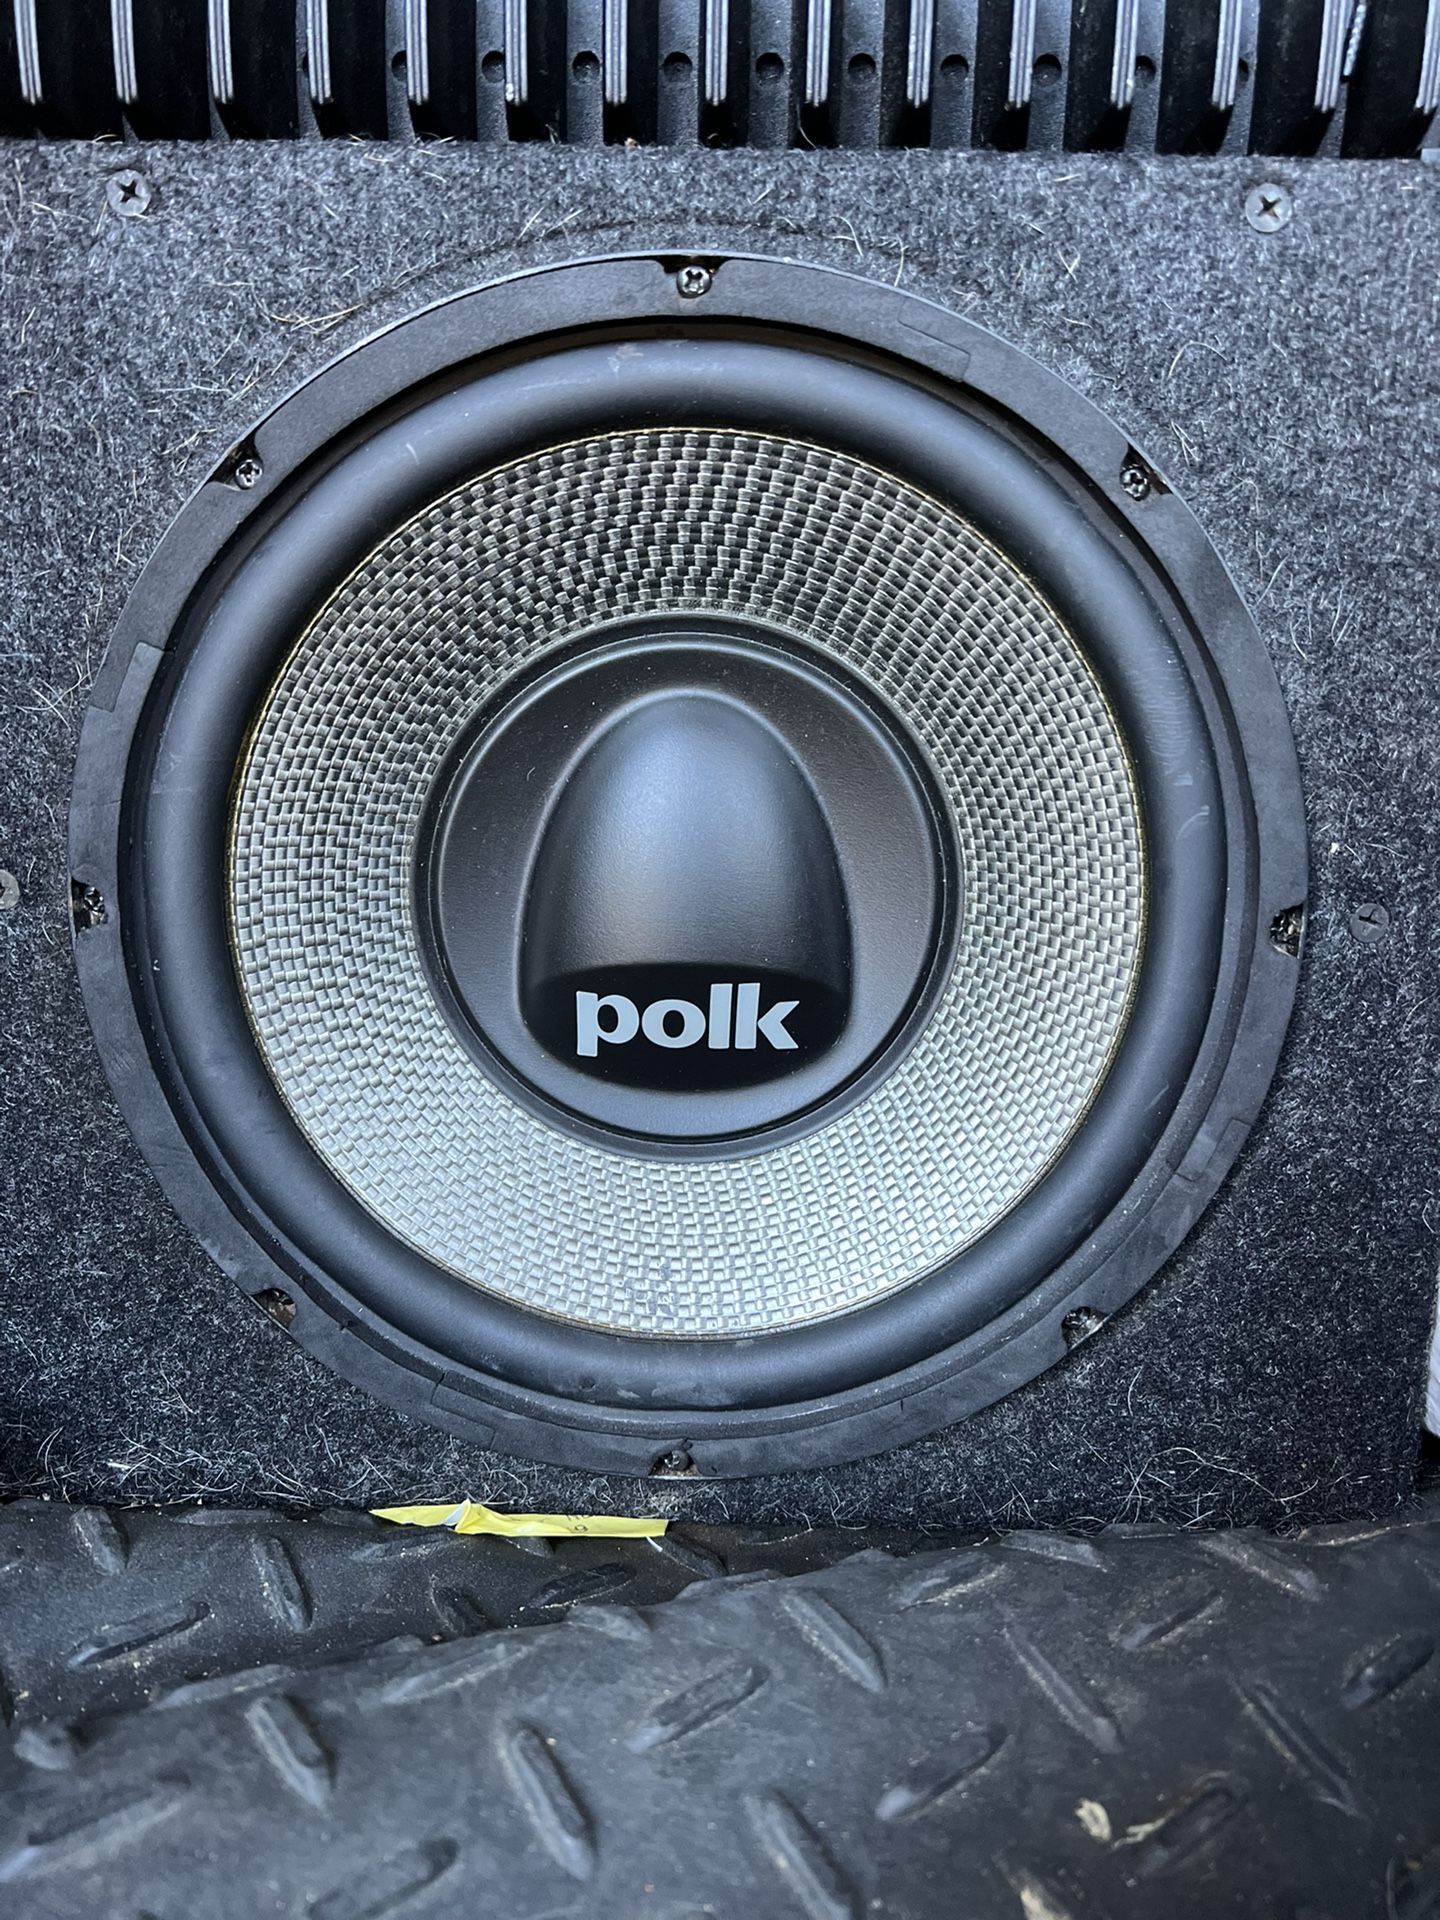 Polk Audio 10” Subwoofer